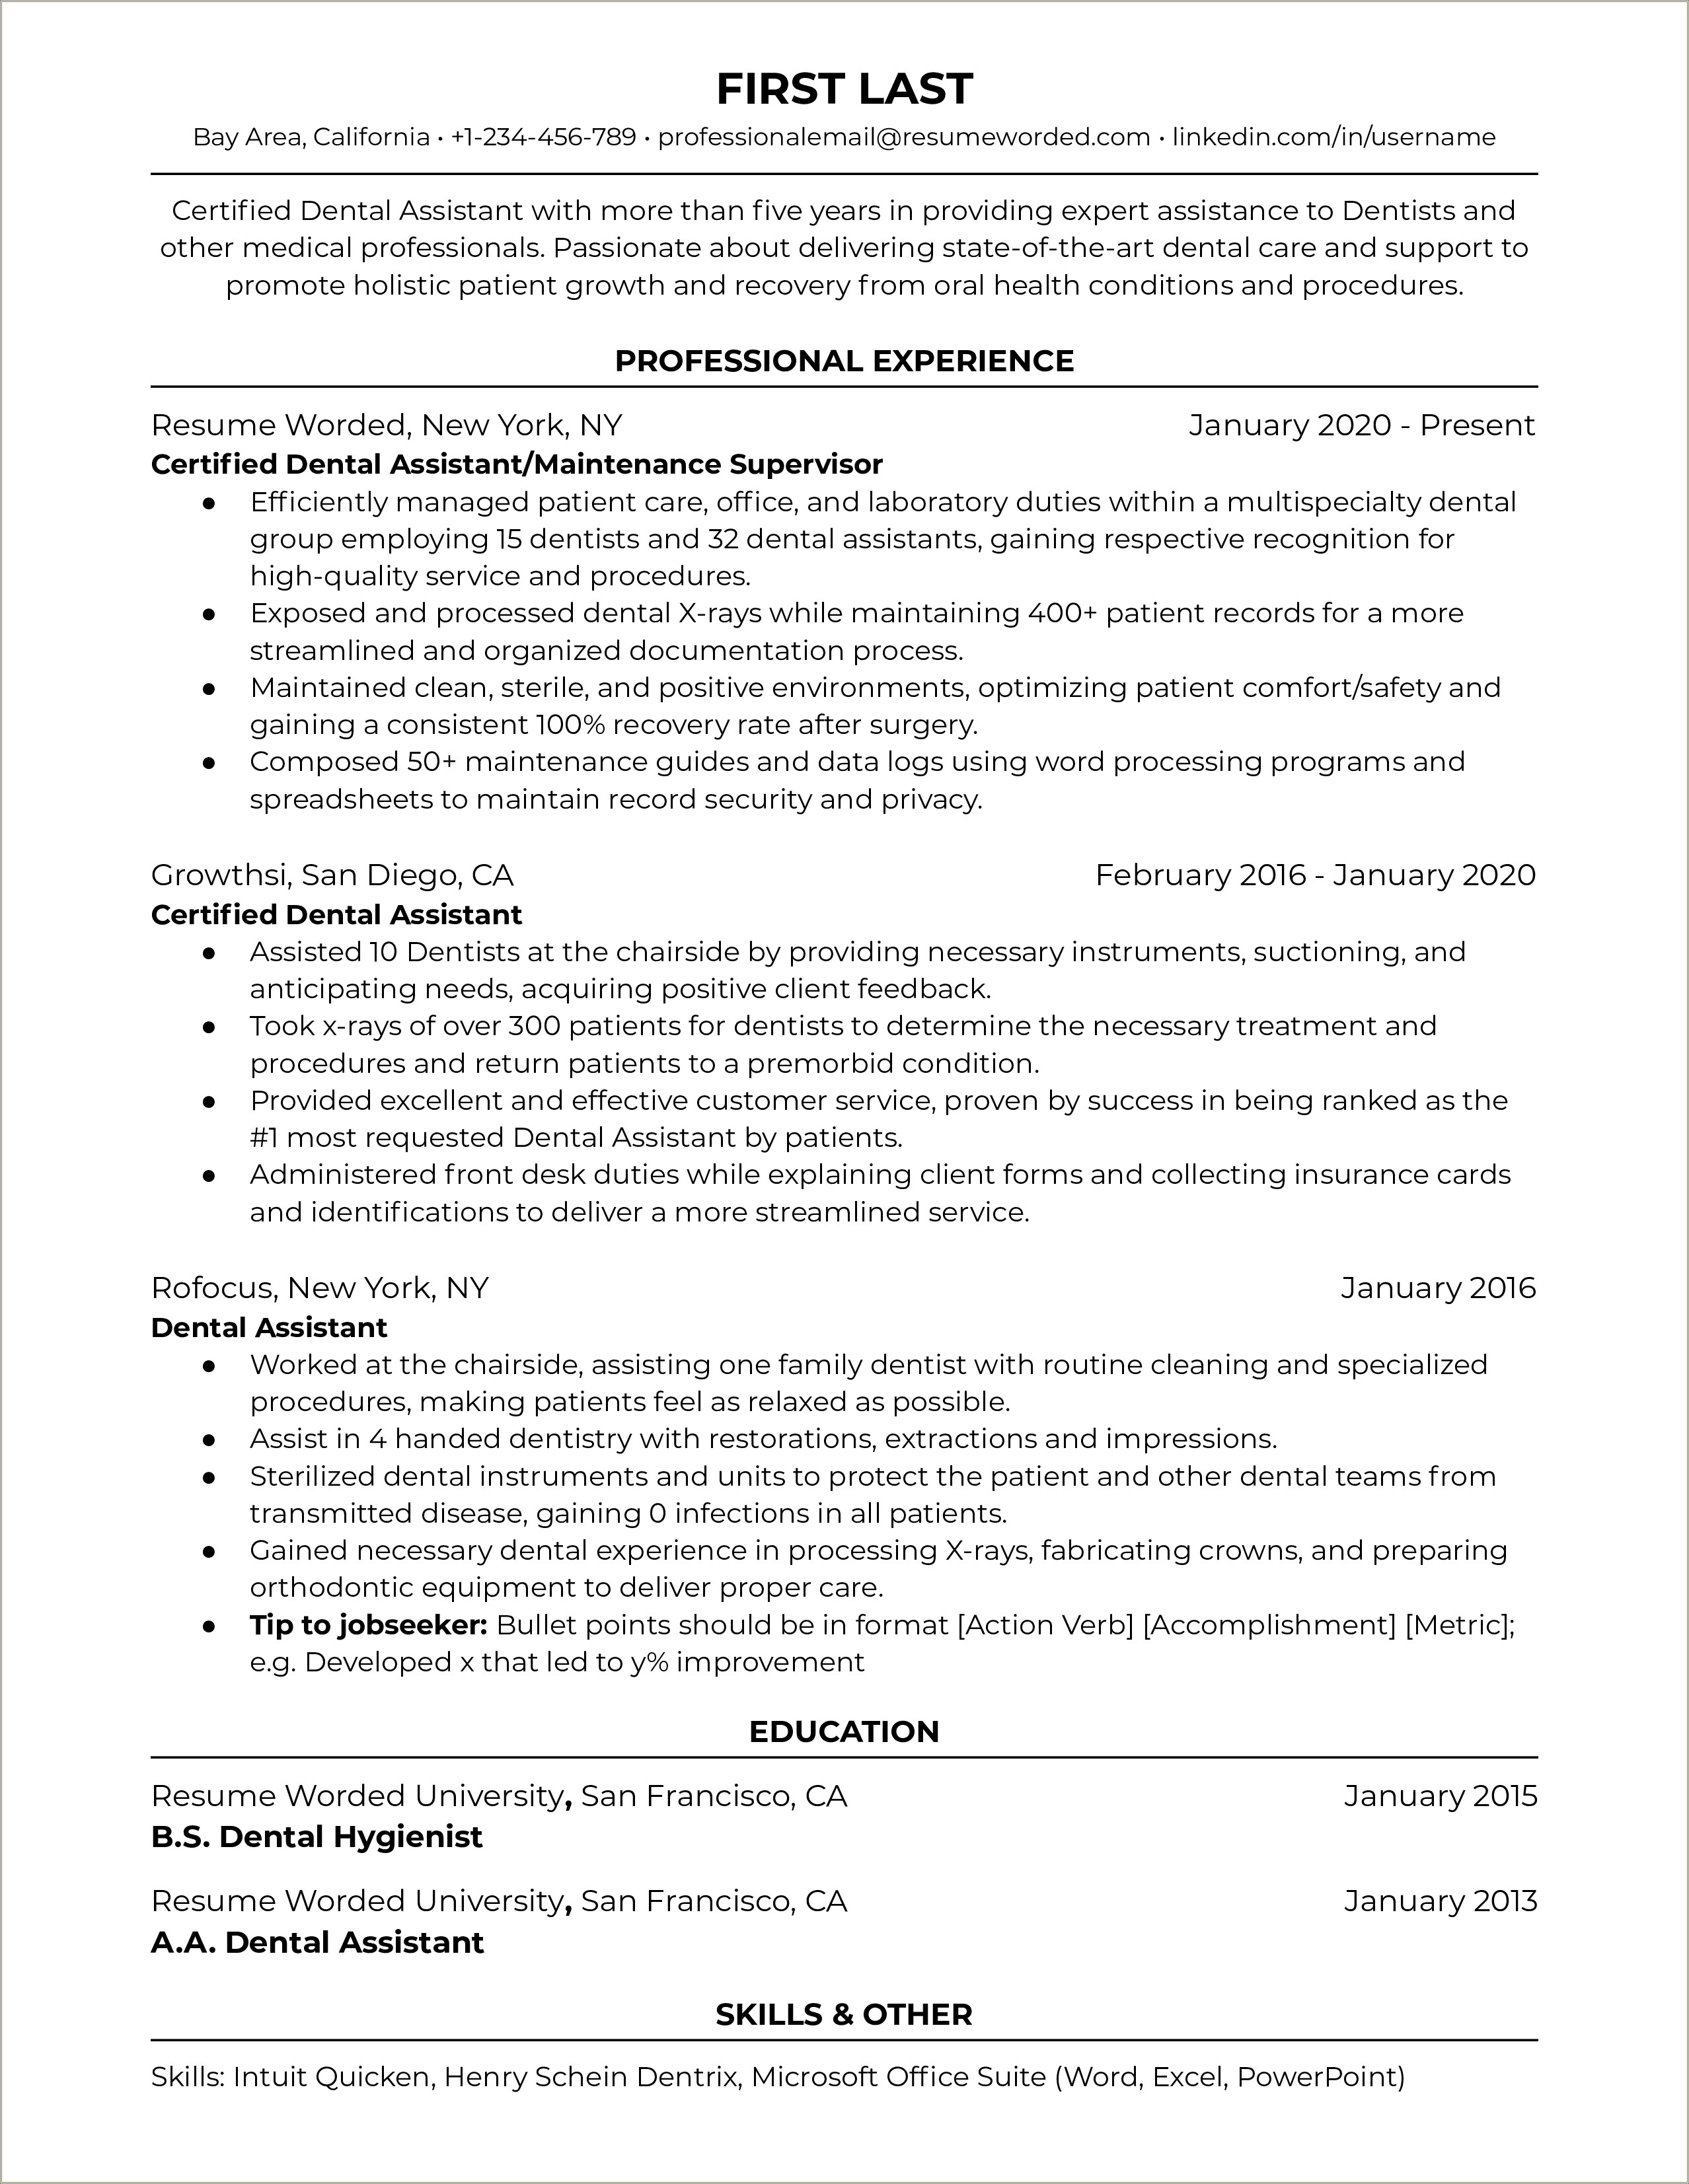 Resume Profile Sample For Dental Assistant Position